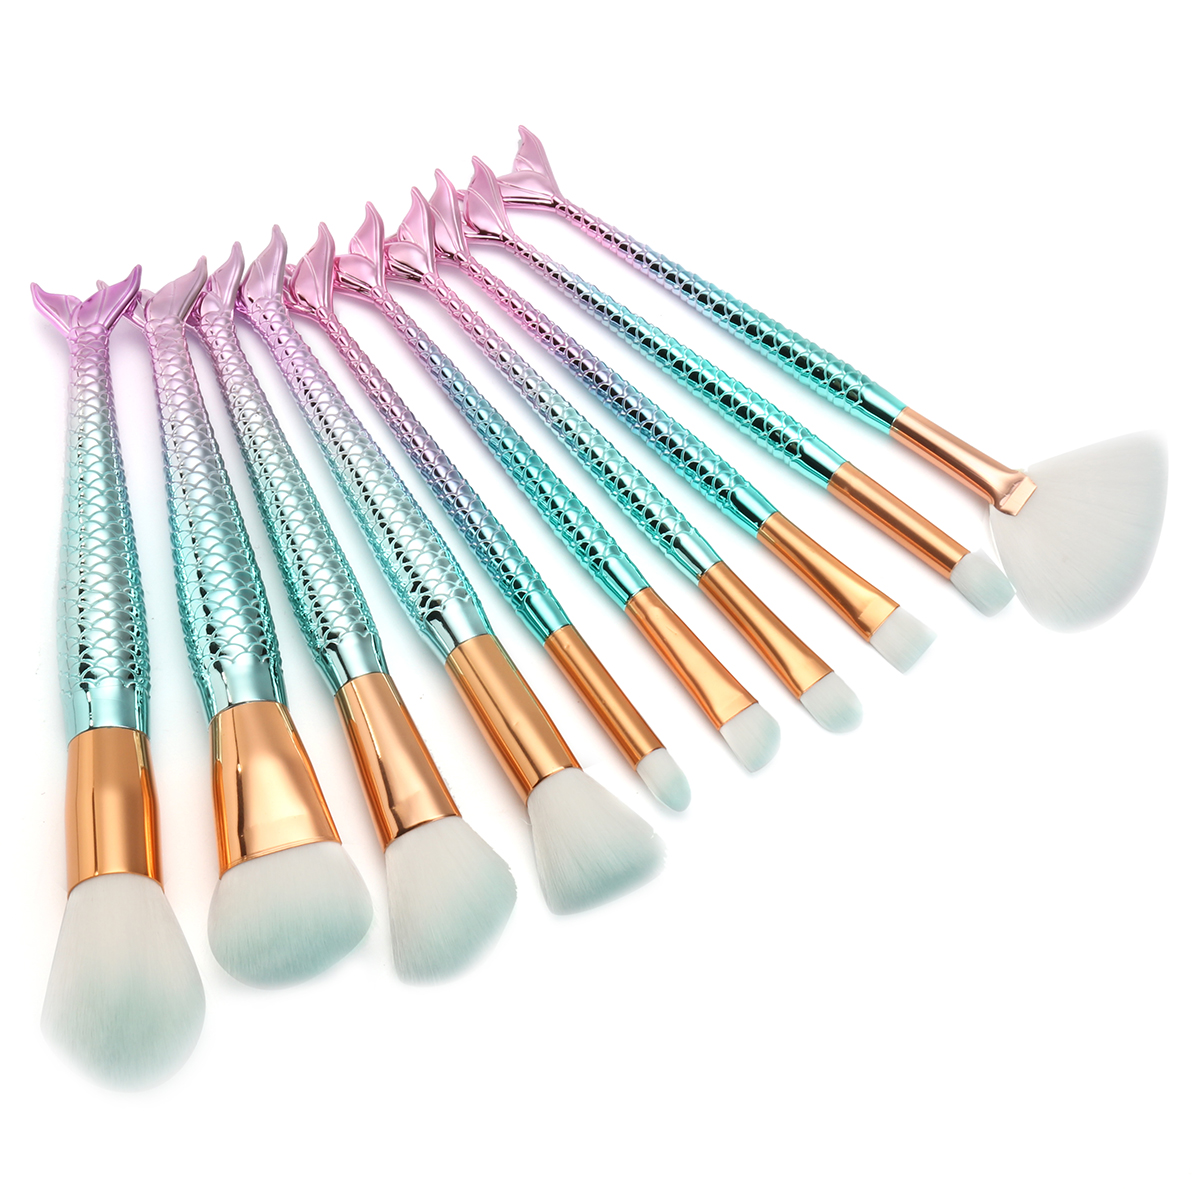 LUCKYFINE Mermaid Makeup Brushes Set 10Pcs